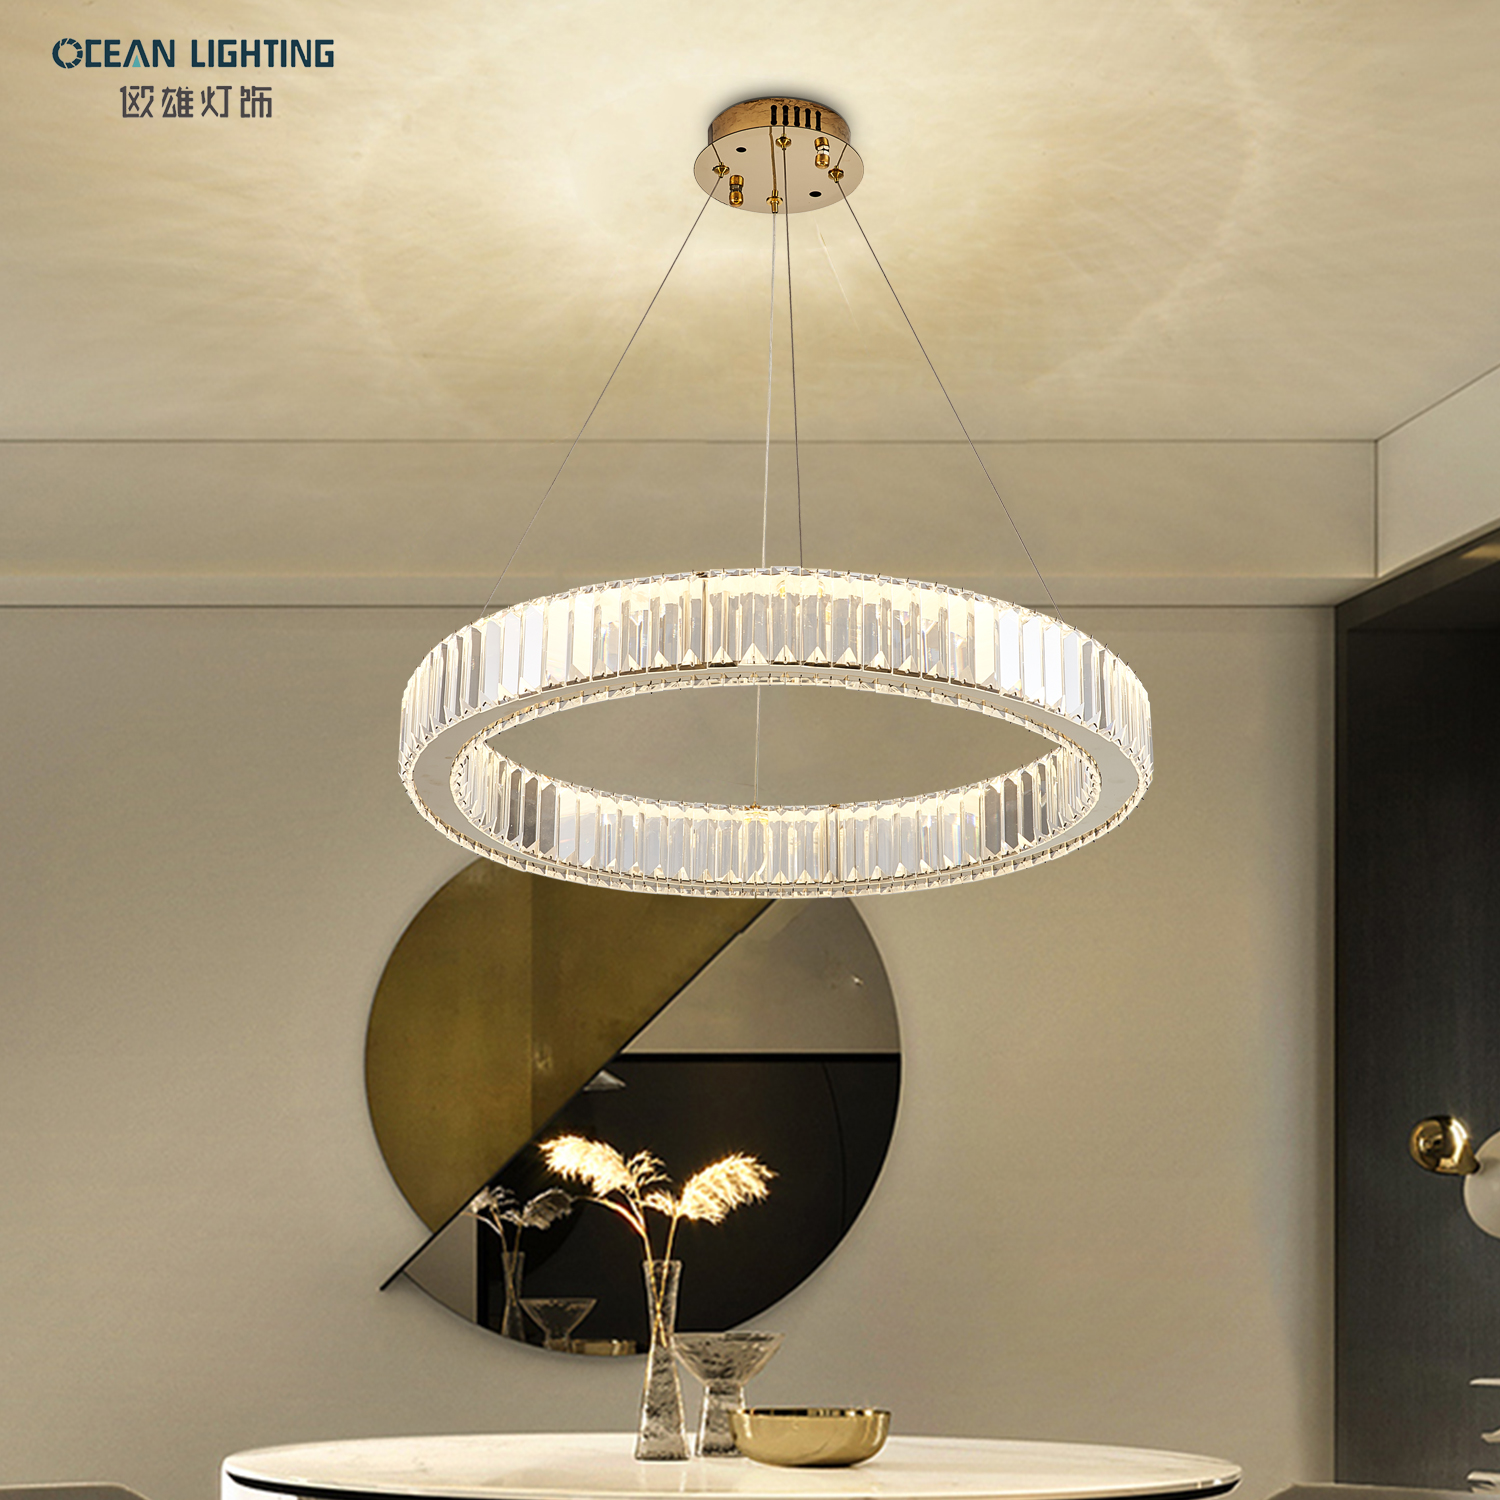 Ocean Lighting LED Crystal Modern Round Luxurious Decoration Pendant Light